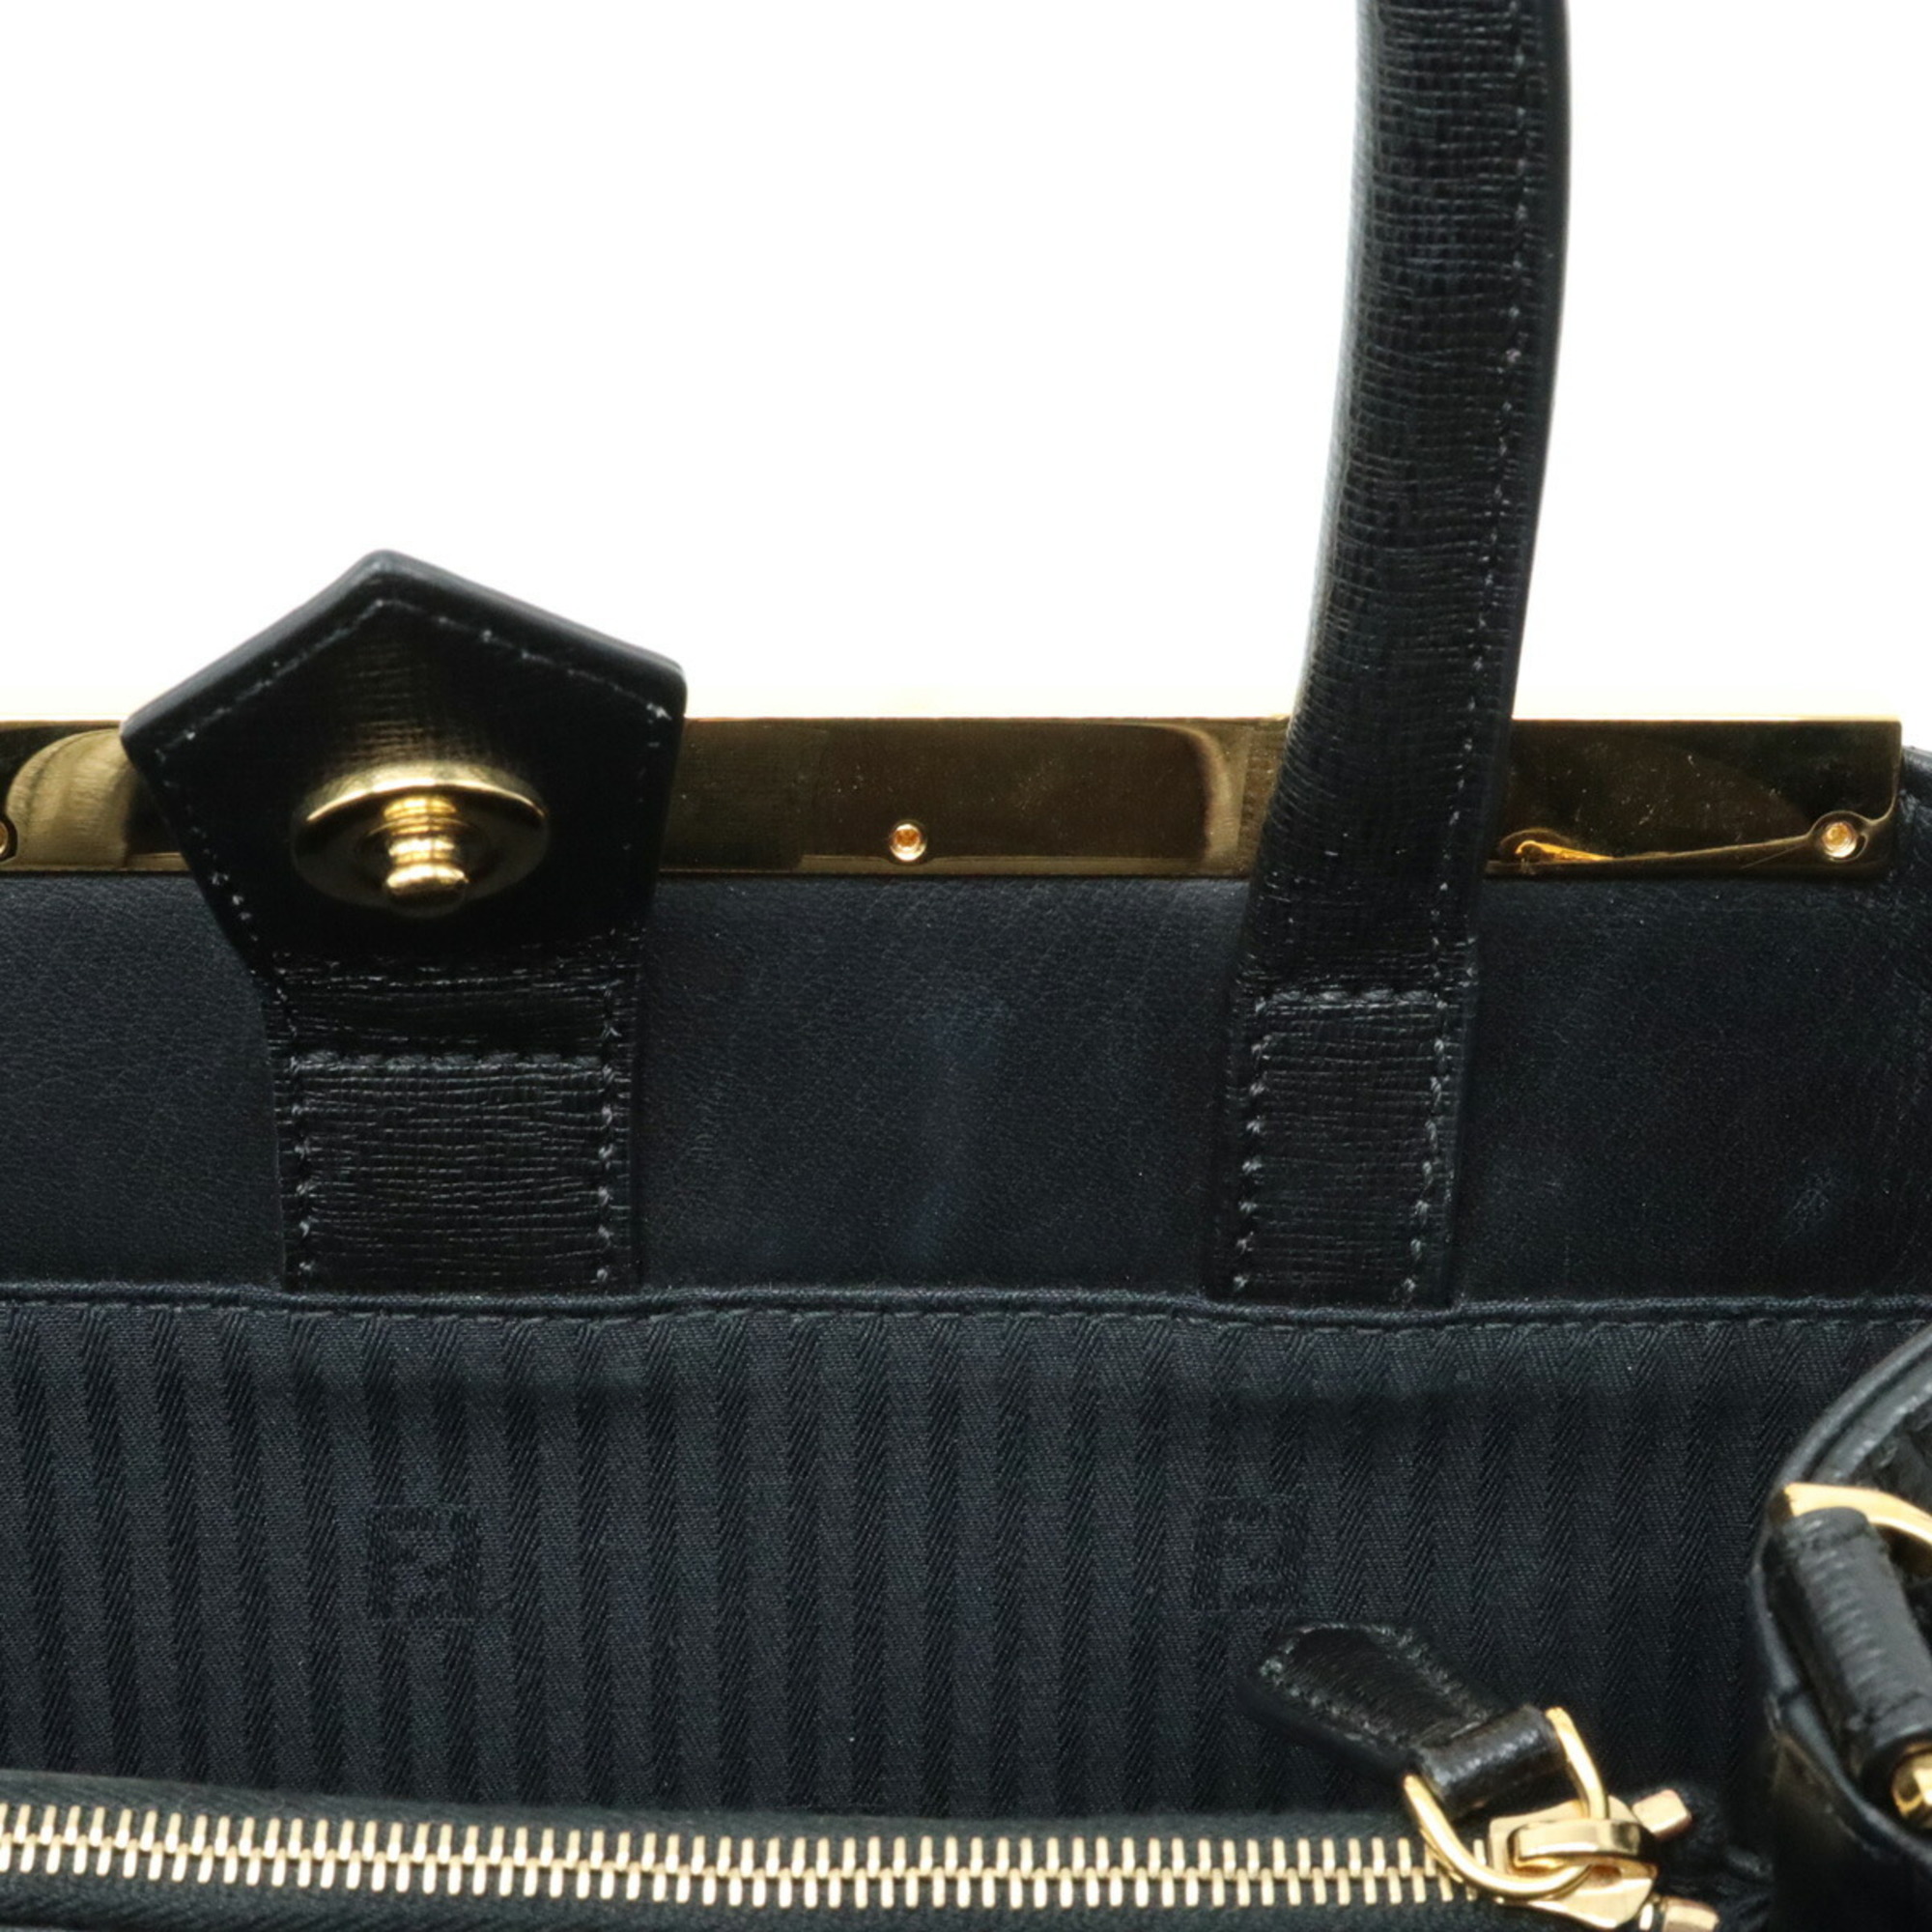 FENDI PETITE 2JOURS Handbag Tote Bag Shoulder Leather Black 8BH253